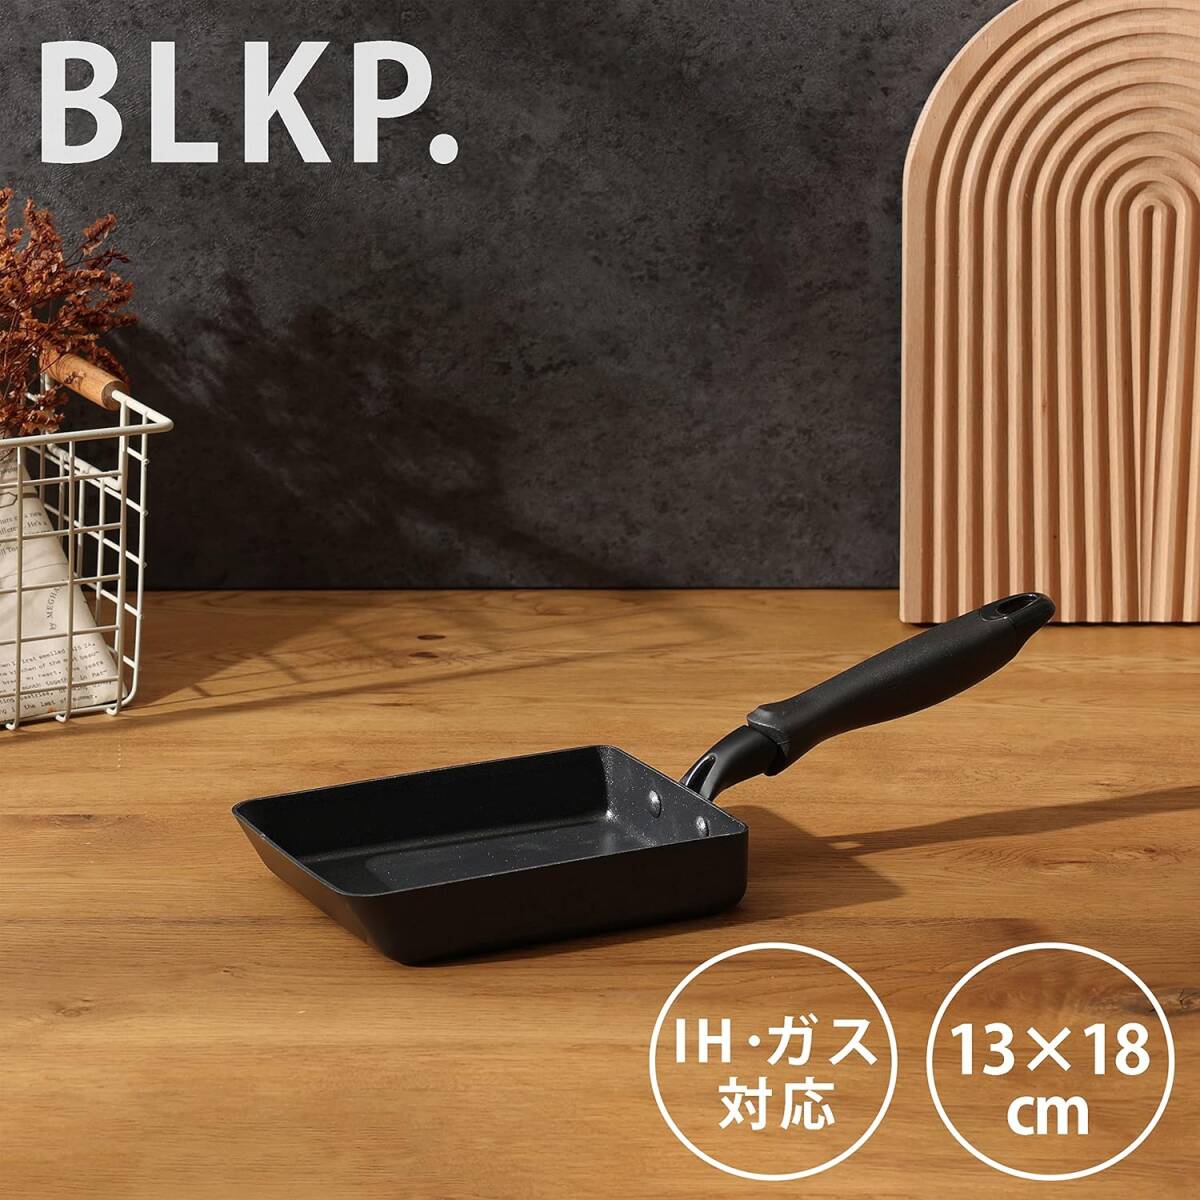 【BLKP】 パール金属 玉子焼き器 IH対応 フライパン 限定 マット ブラック 13×18cm BLKP 黒 AZ-5004_画像2